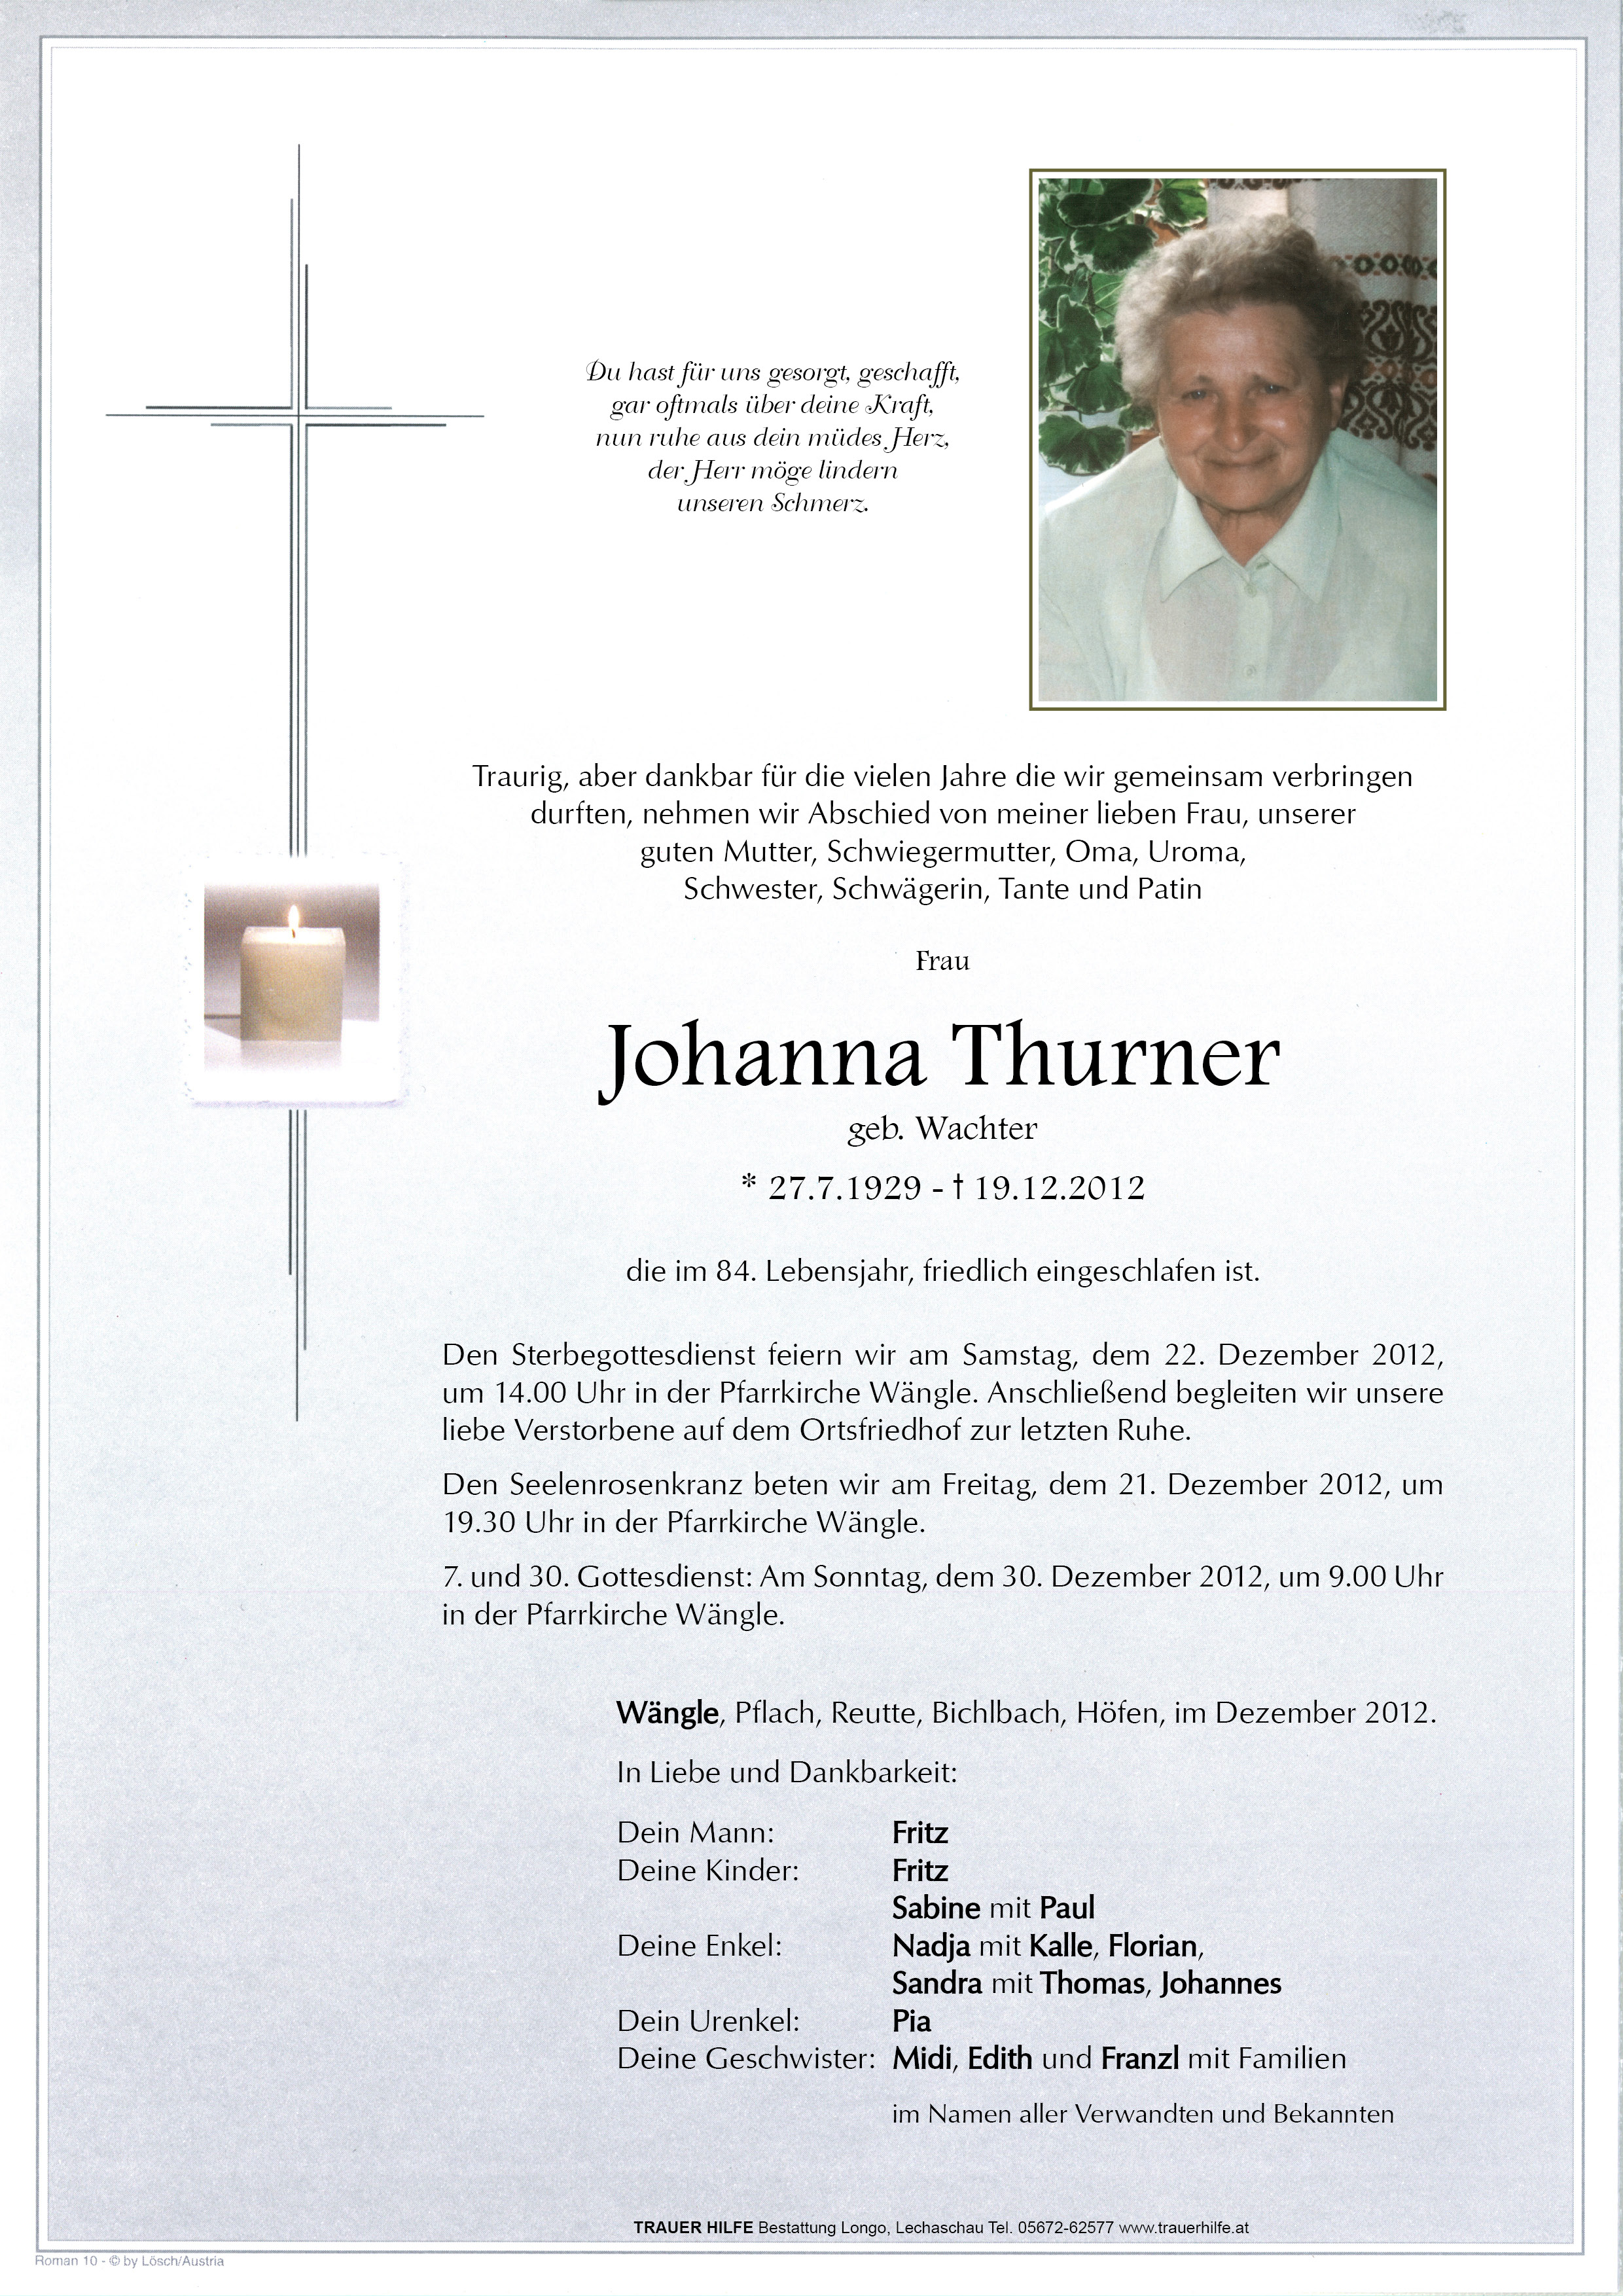 Johanna Thurner